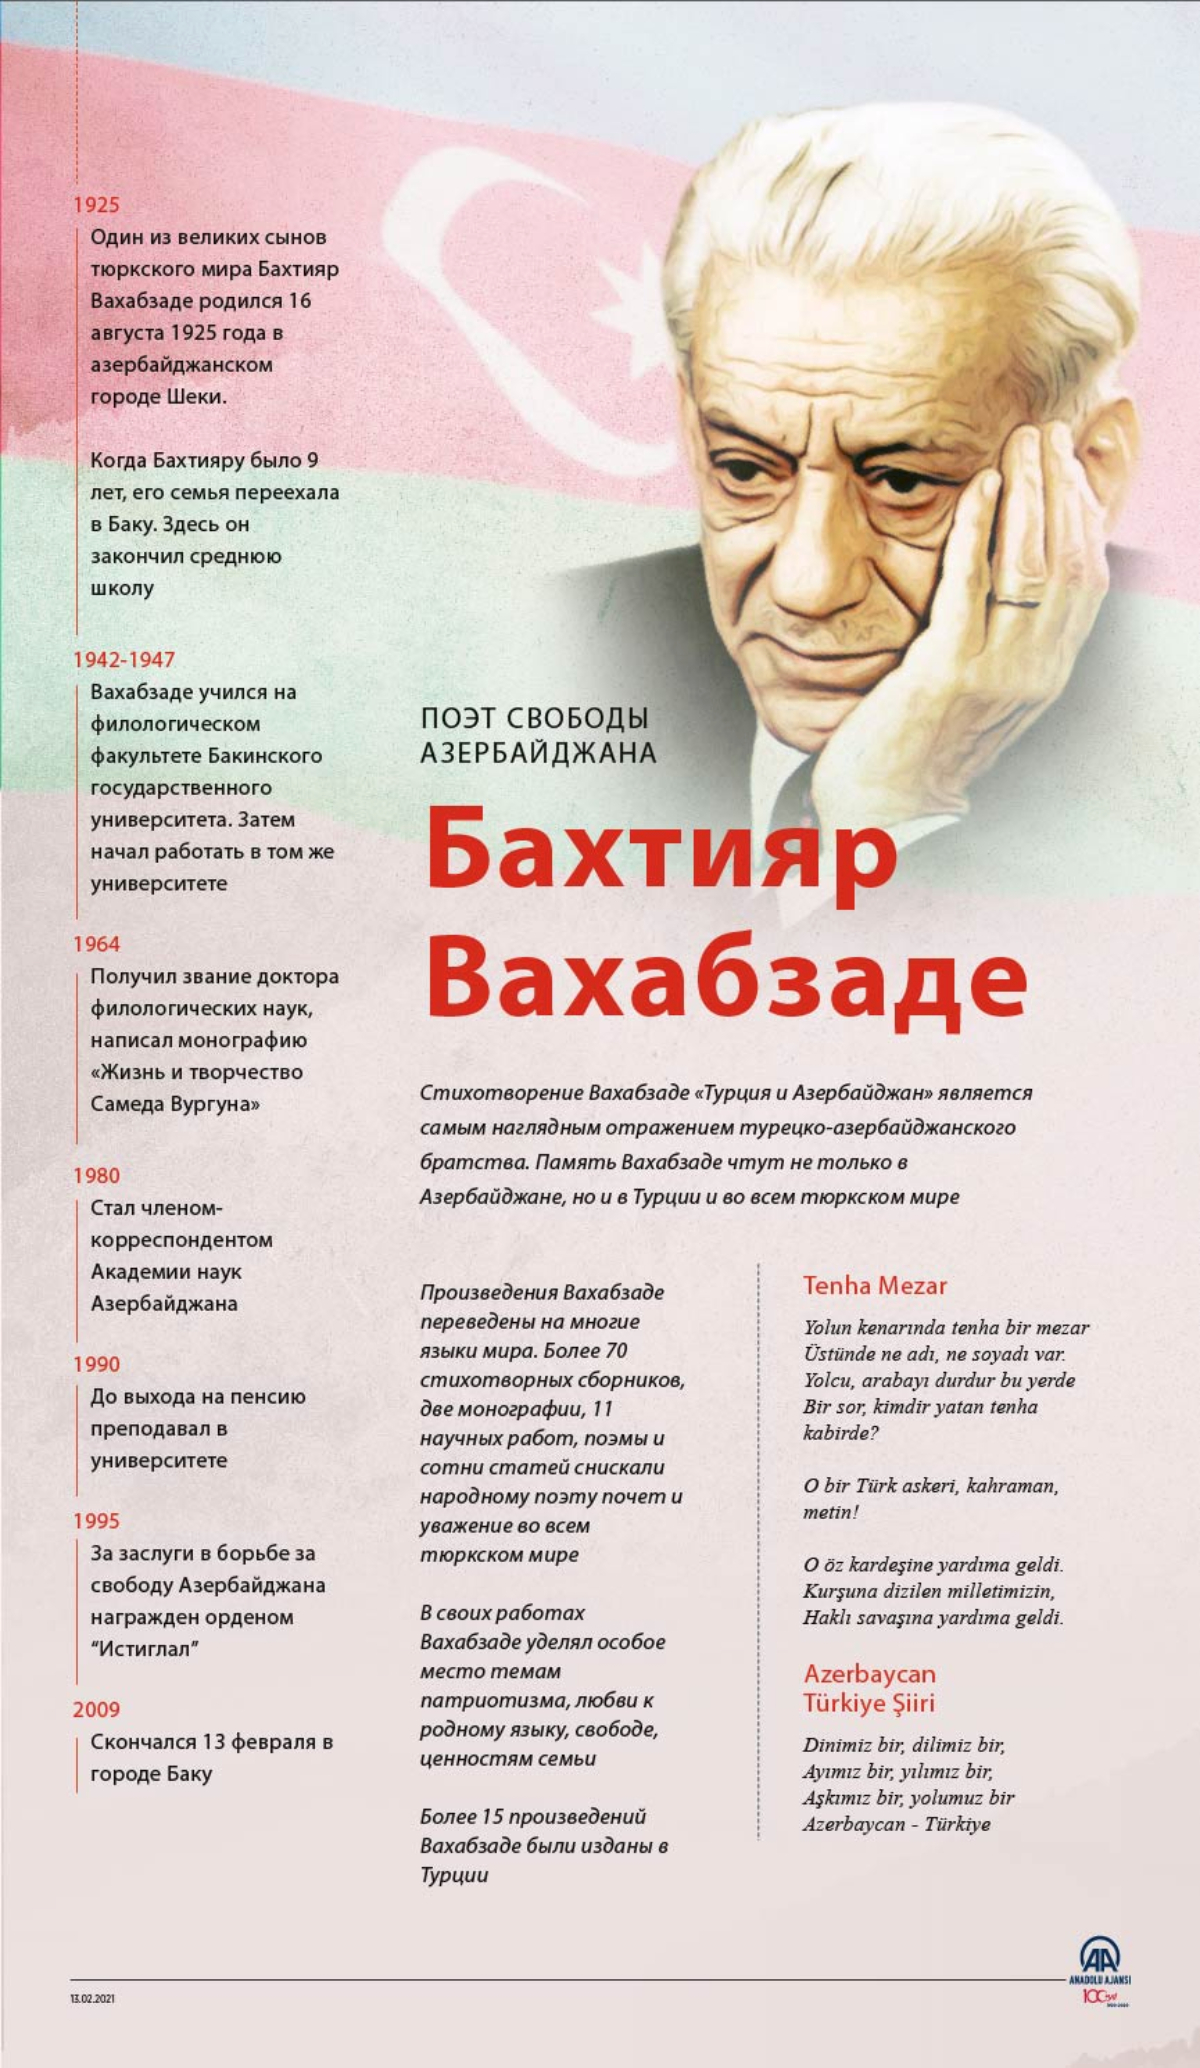 Бахтияр Вахабзаде — поэт свободы